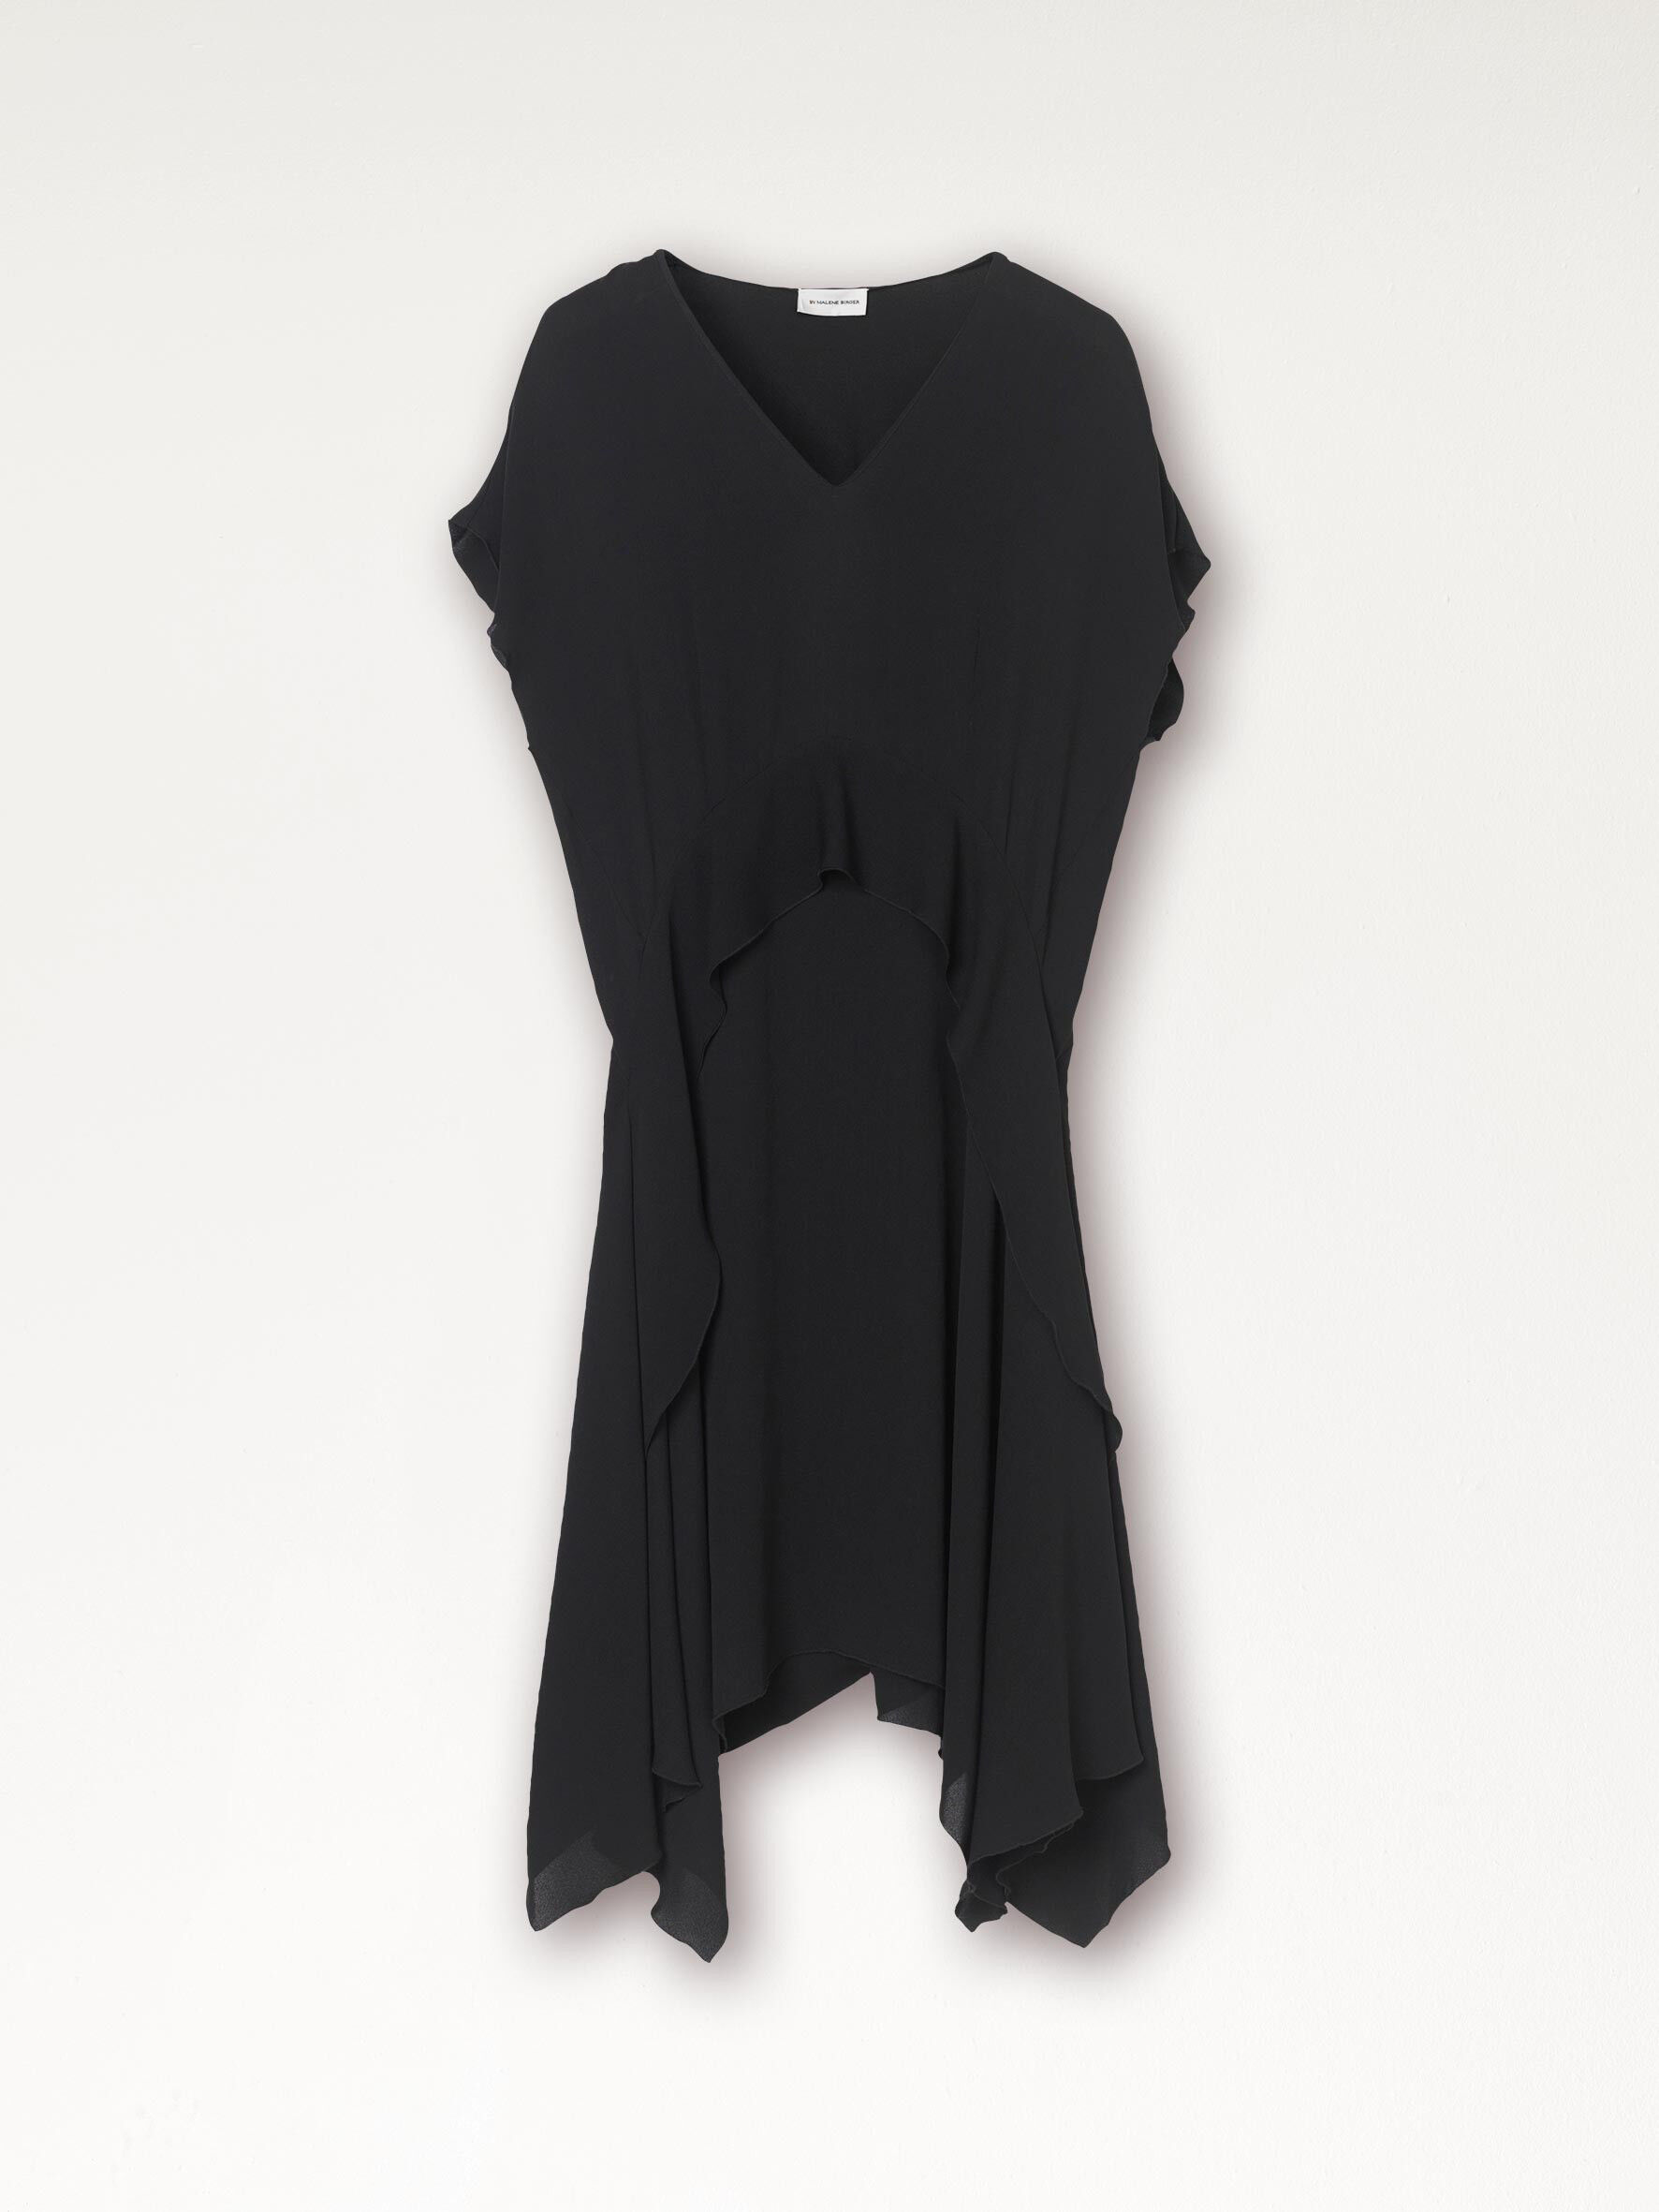 malene birger black dress